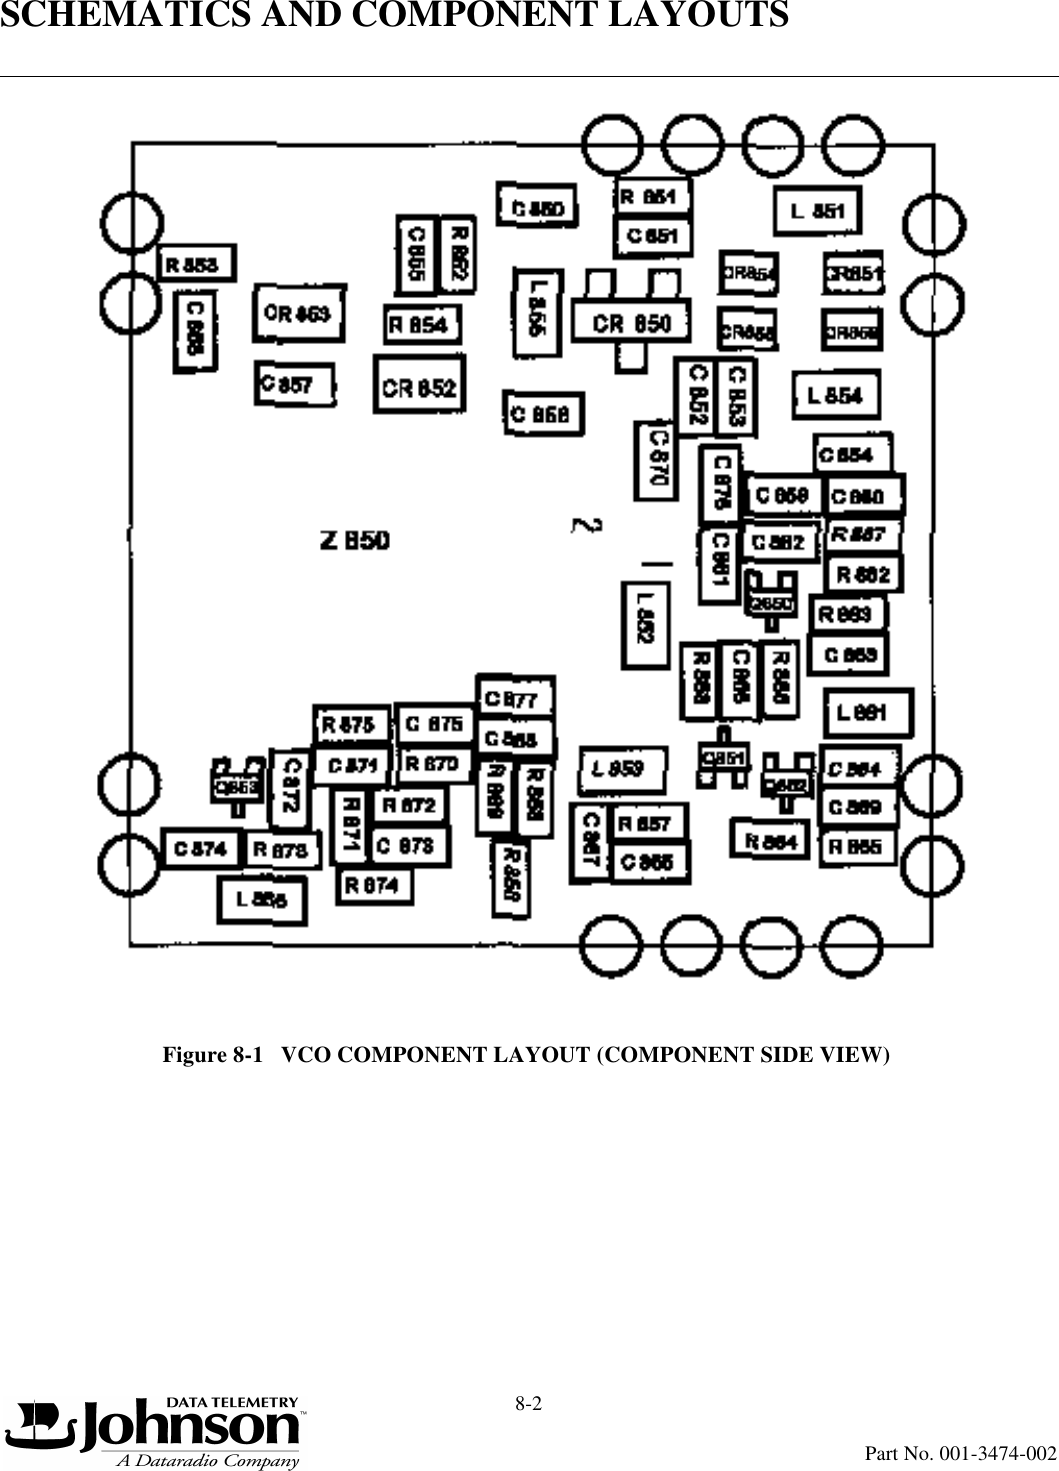 SCHEMATICS AND COMPONENT LAYOUTS8-2Part No. 001-3474-002Figure 8-1   VCO COMPONENT LAYOUT (COMPONENT SIDE VIEW)